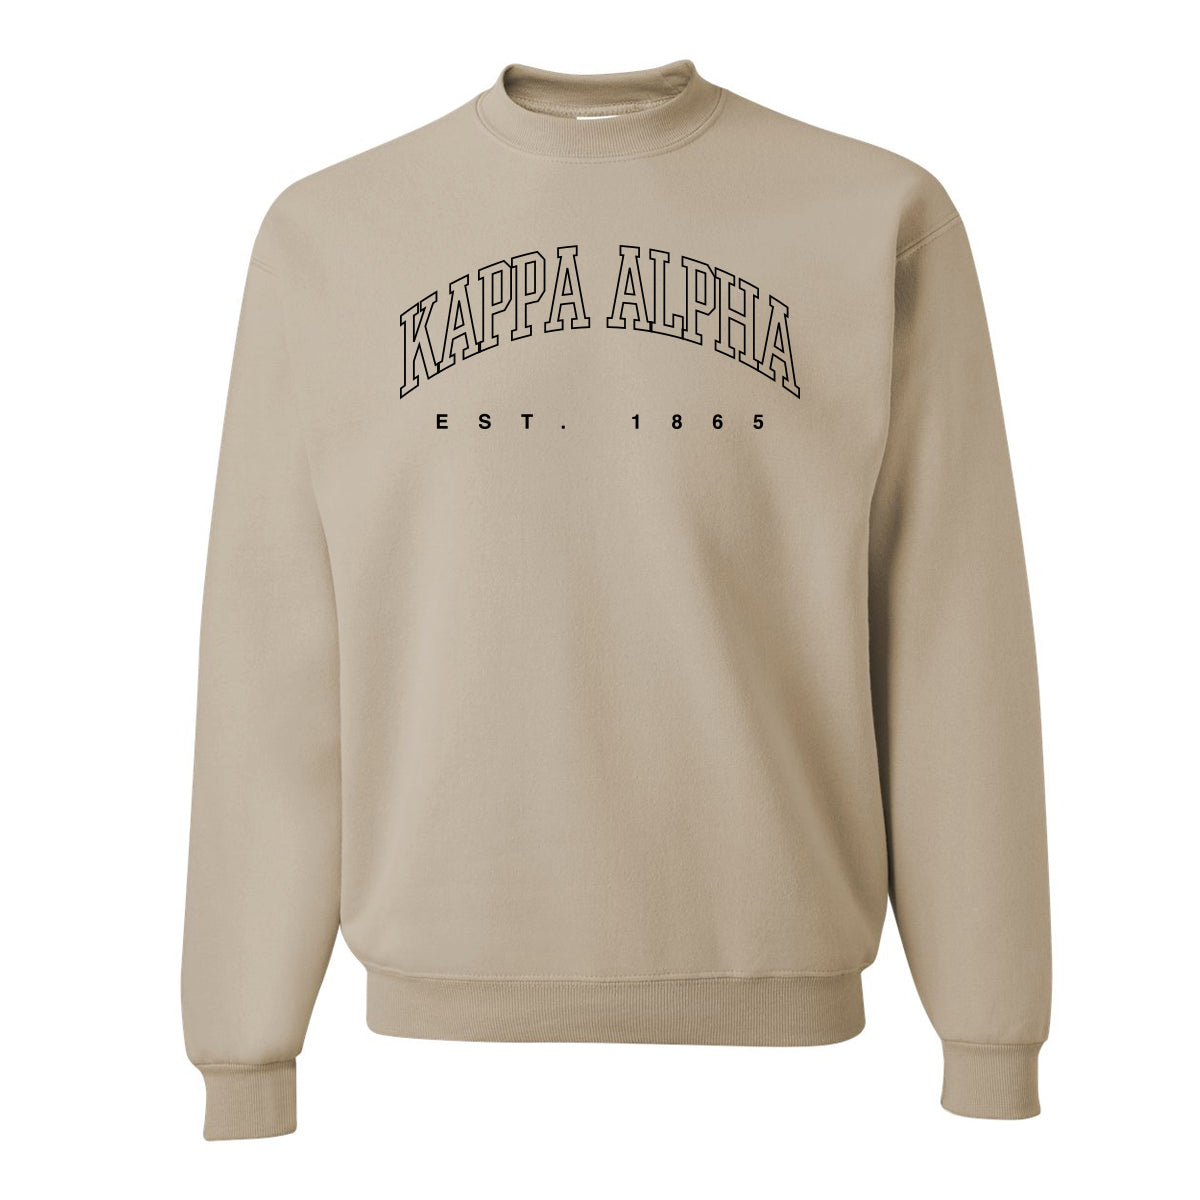 New! Kappa Alpha Classic Neutral Crewneck